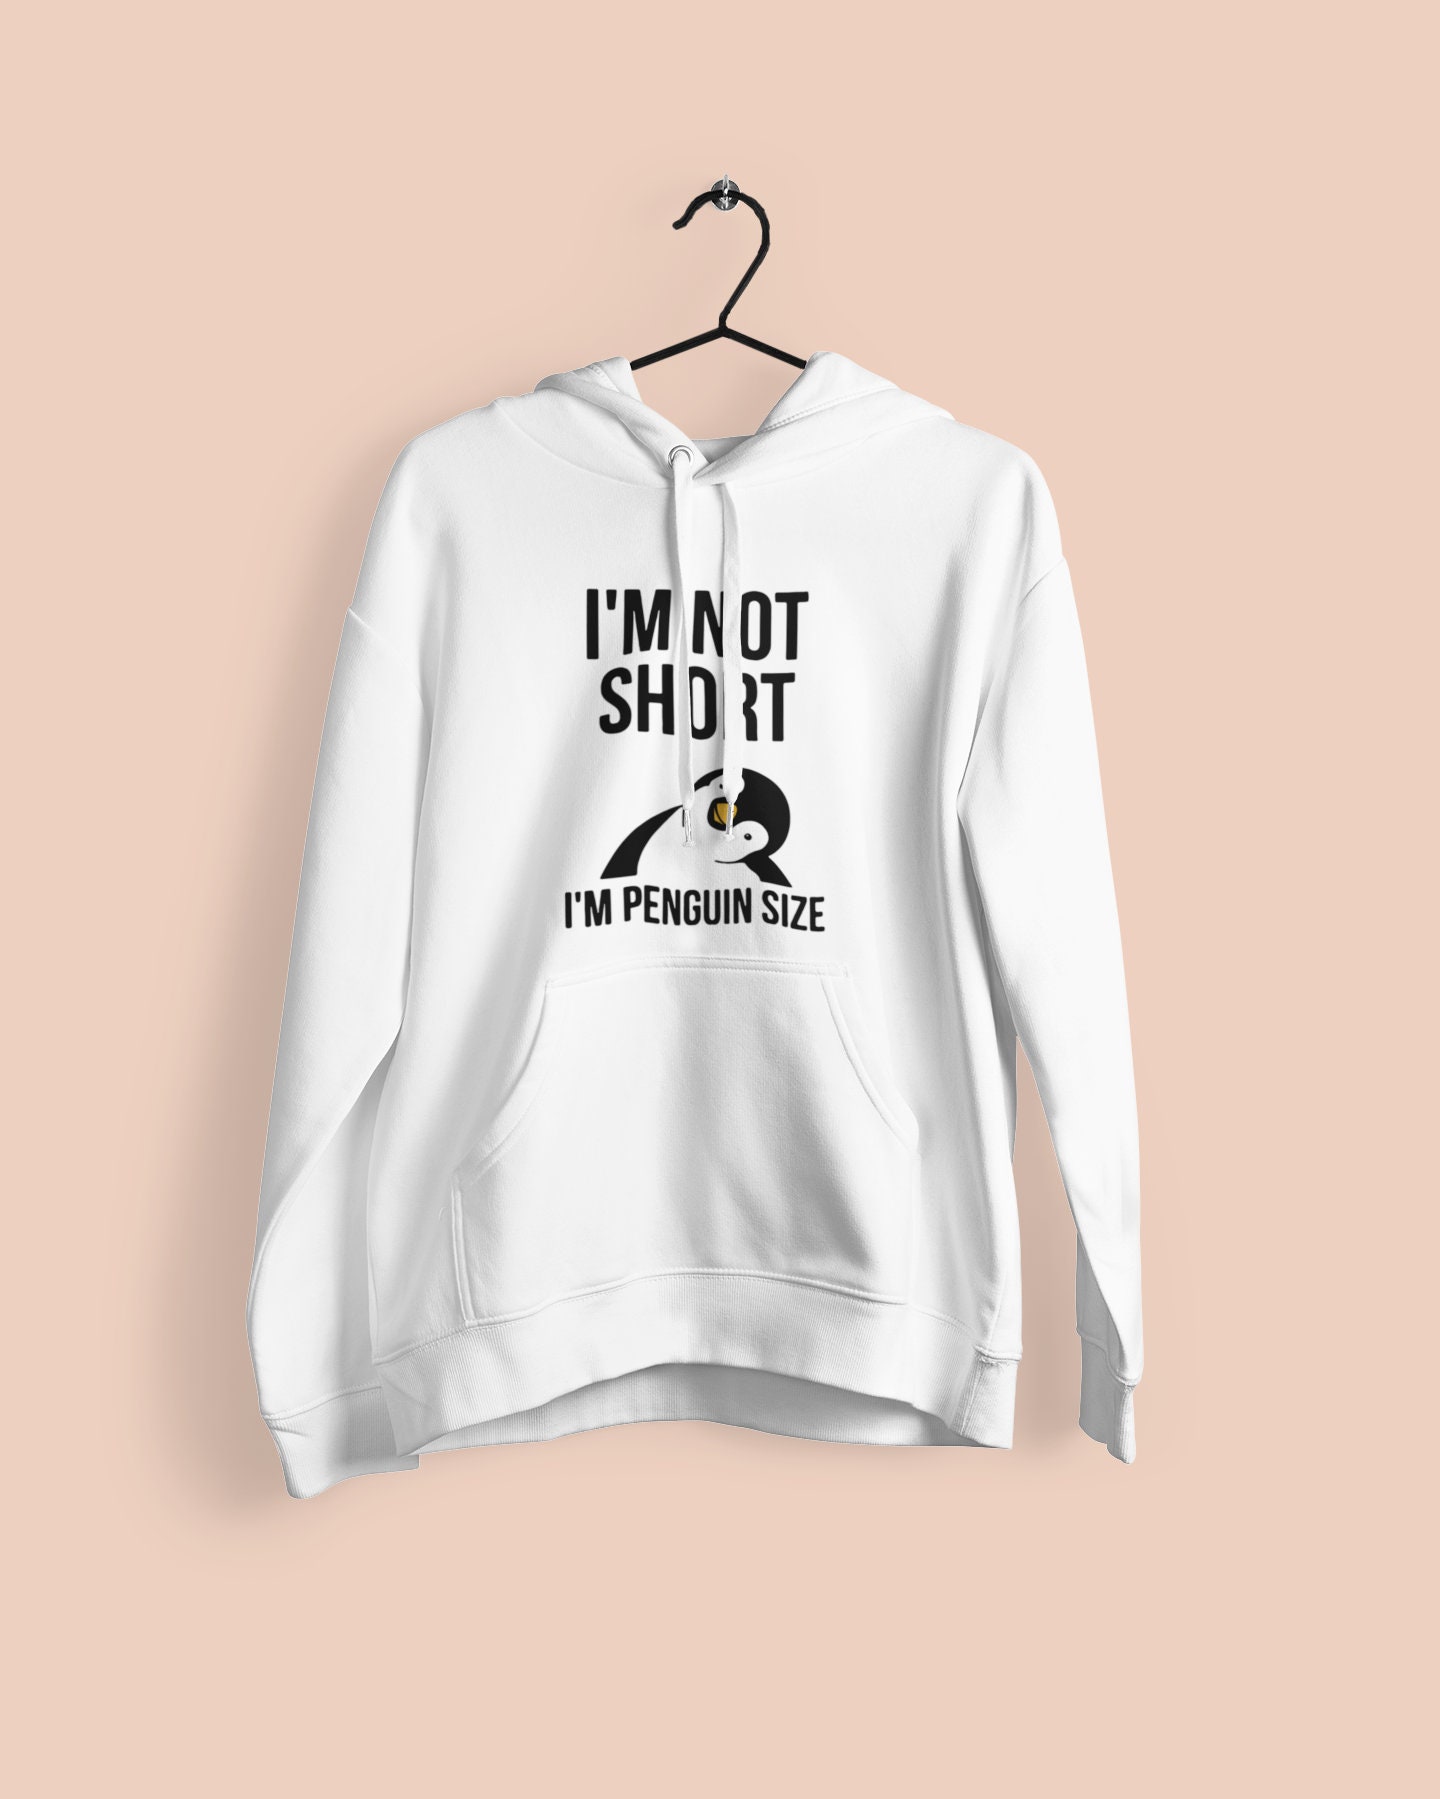 Hope Fight Penguin T Shirts, Penguin Long Sleeve, Penguin Sweatshirt, Penguin Hoodie, I'm Not Short I'm Penguin Size Cute Penguin Funny Shirt